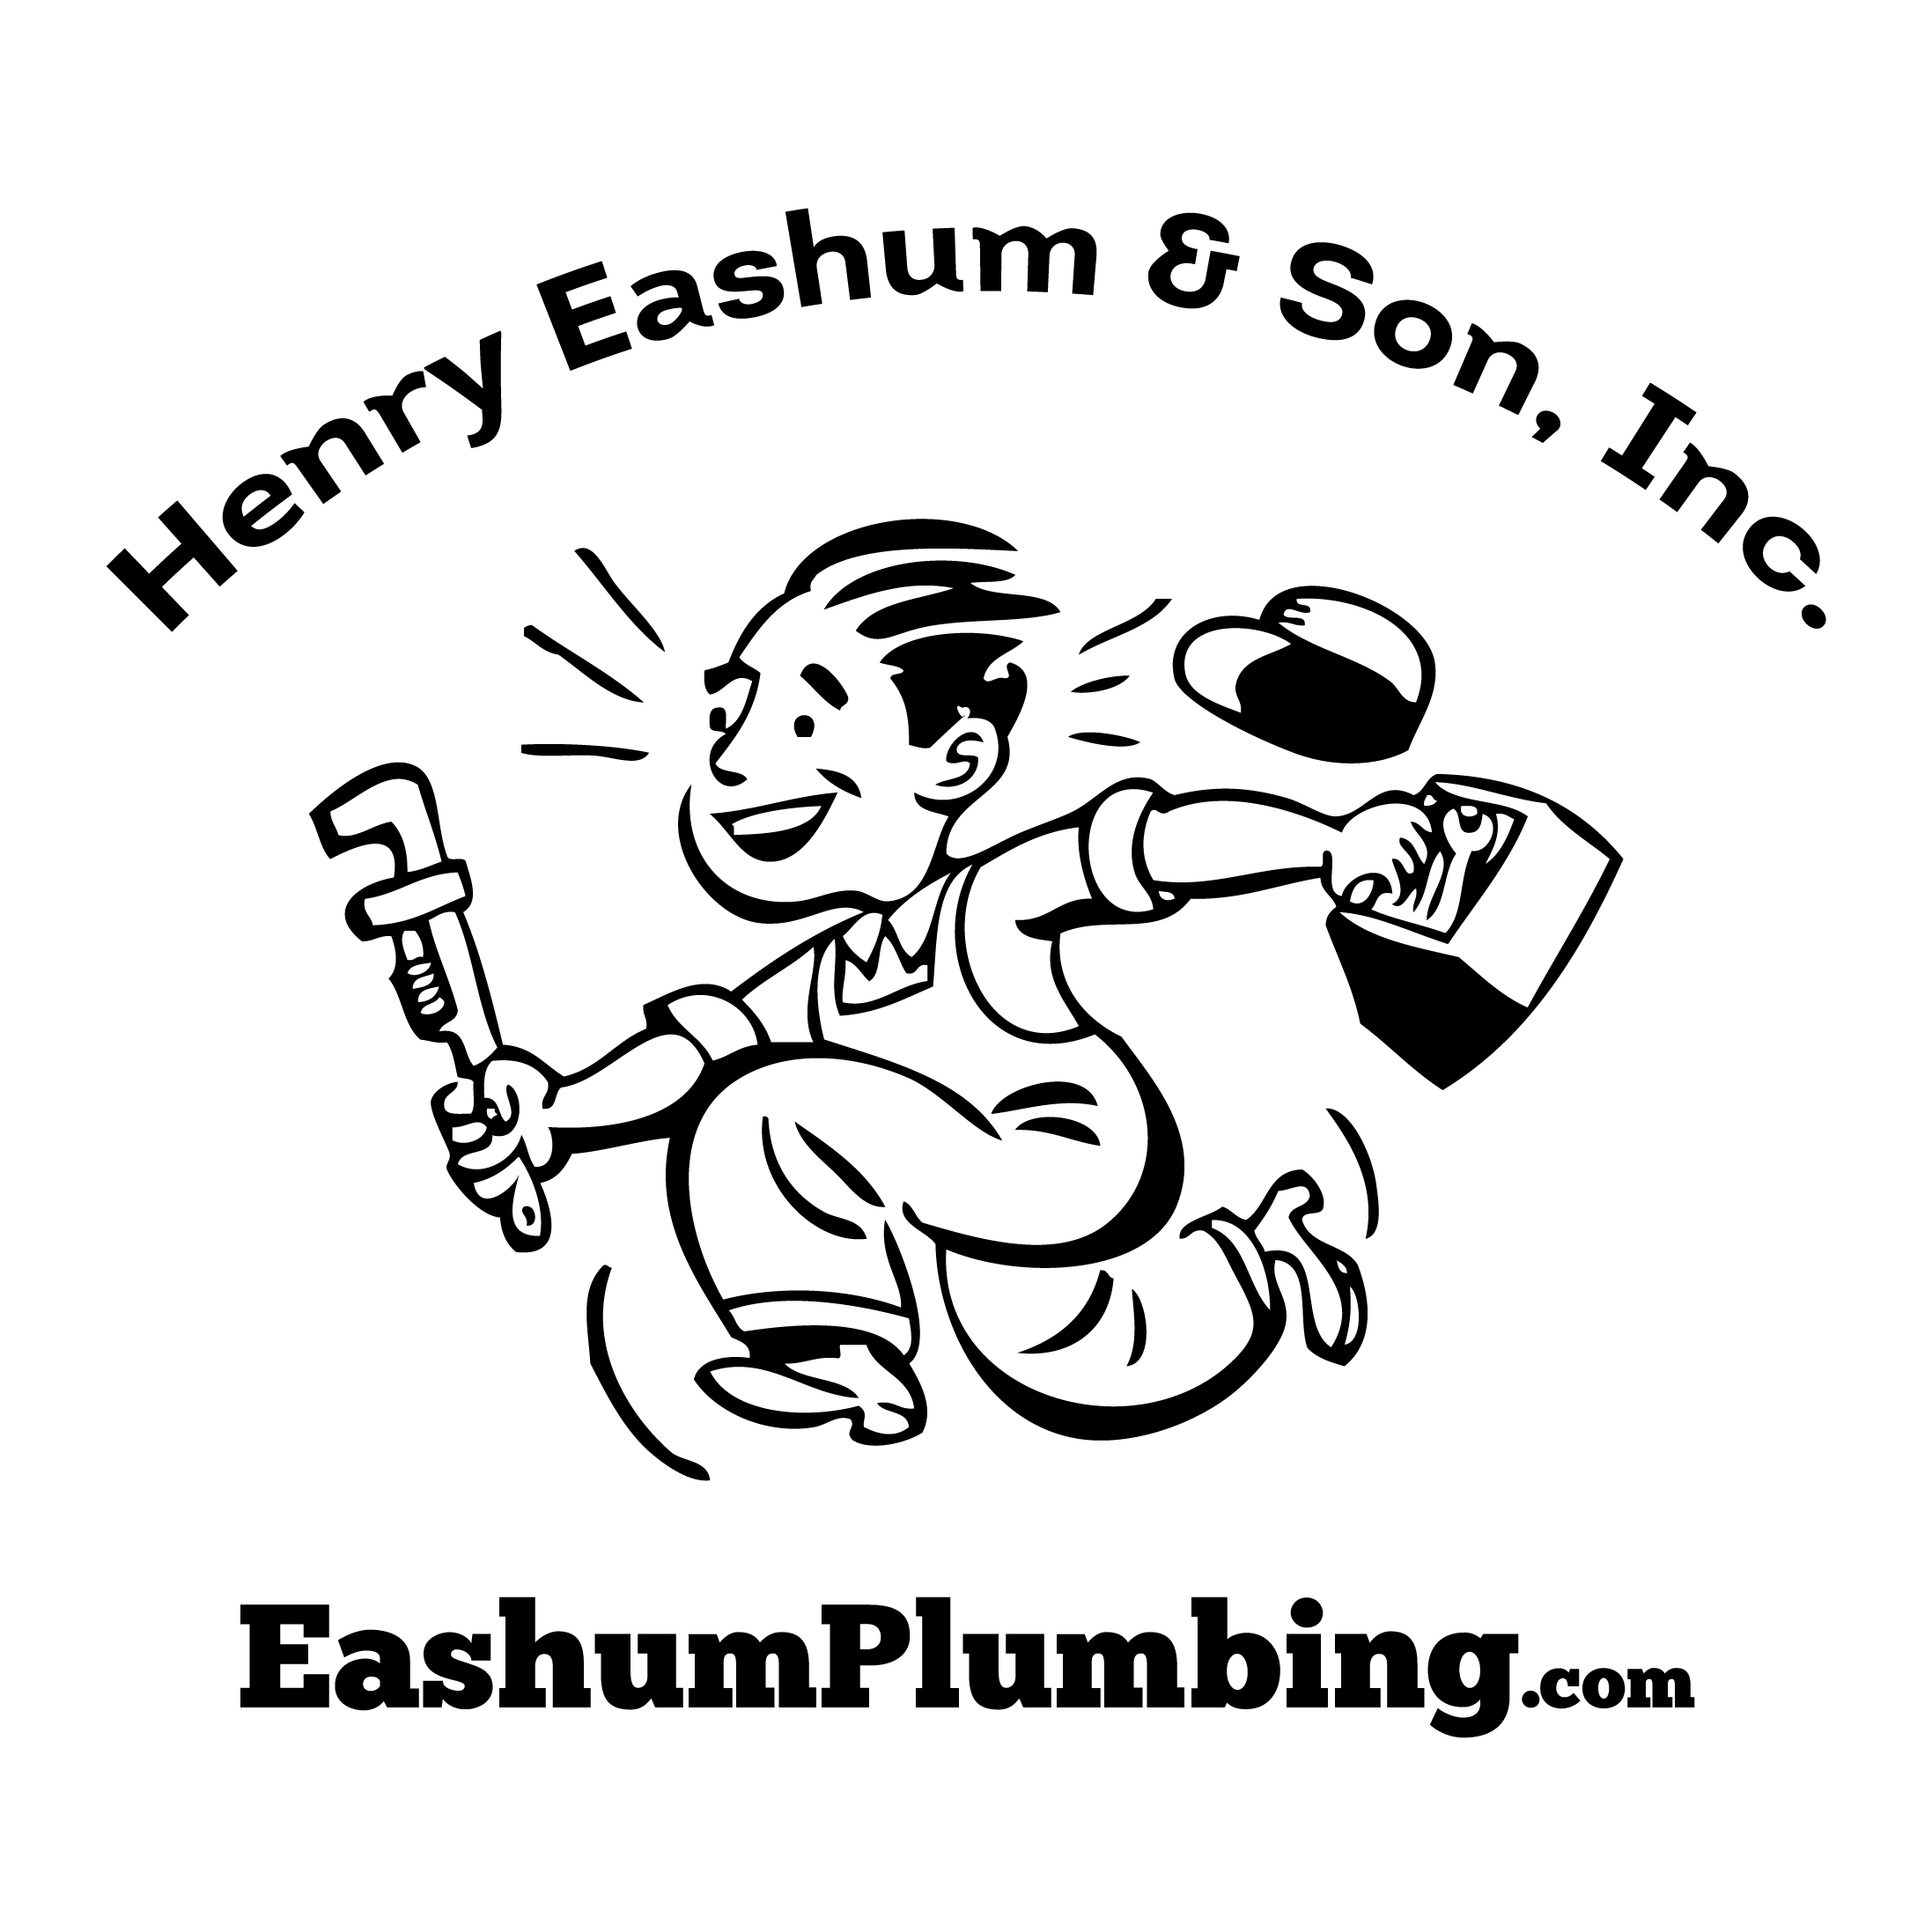 Plumbing, Heating & Air Conditioning Services | Eashum Plumbing